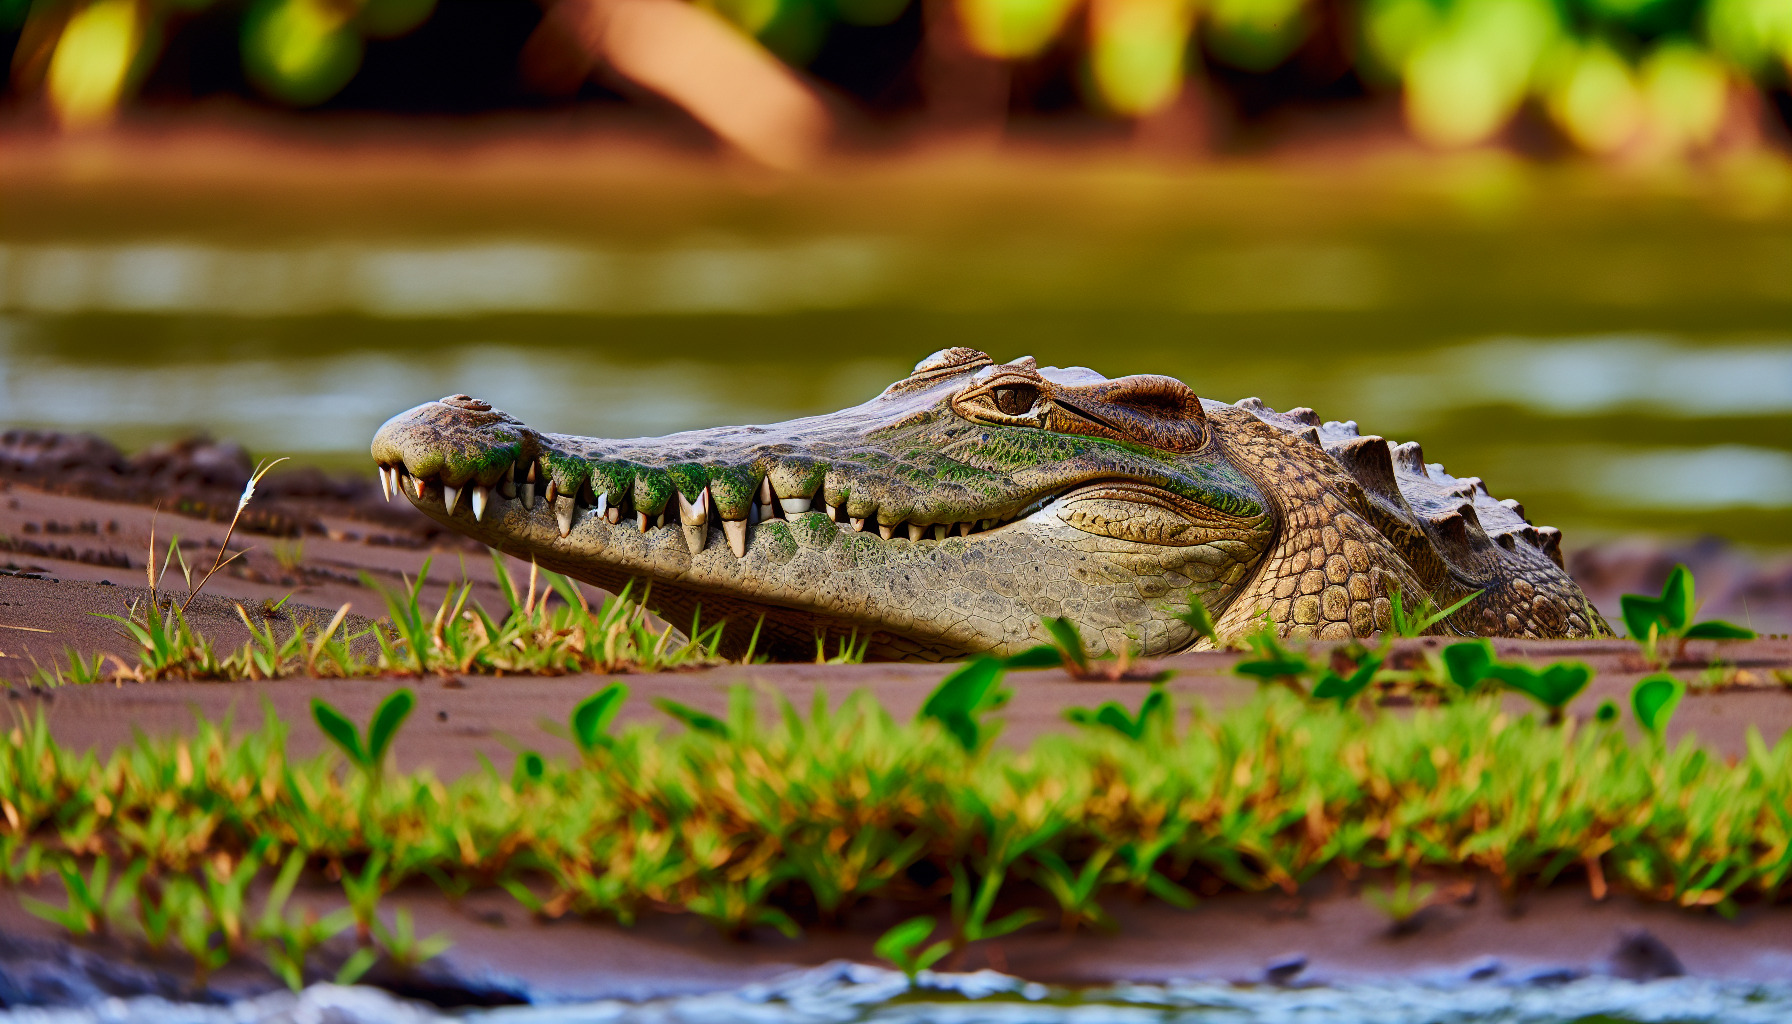 American crocodile in its natural habitat